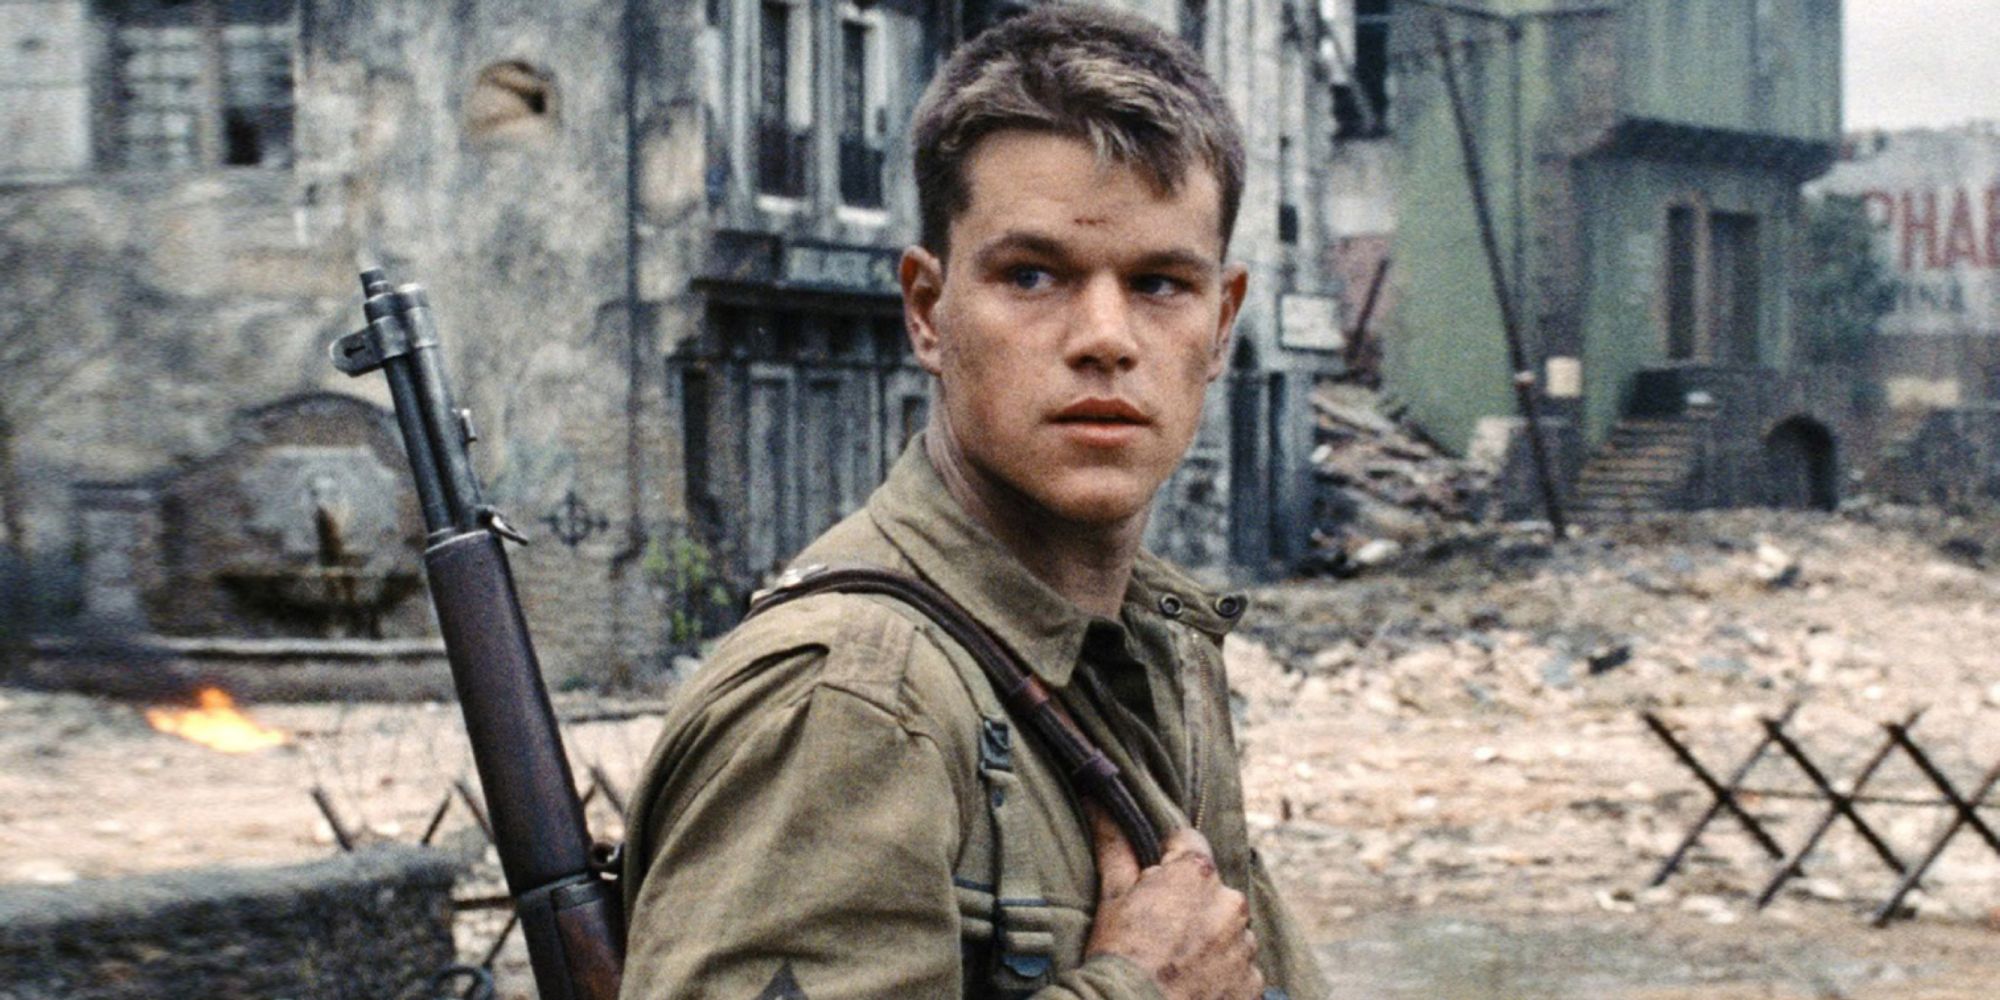 Matt Damon as Private Ryan looking back at something off camera in Saving Private Ryan - 1998